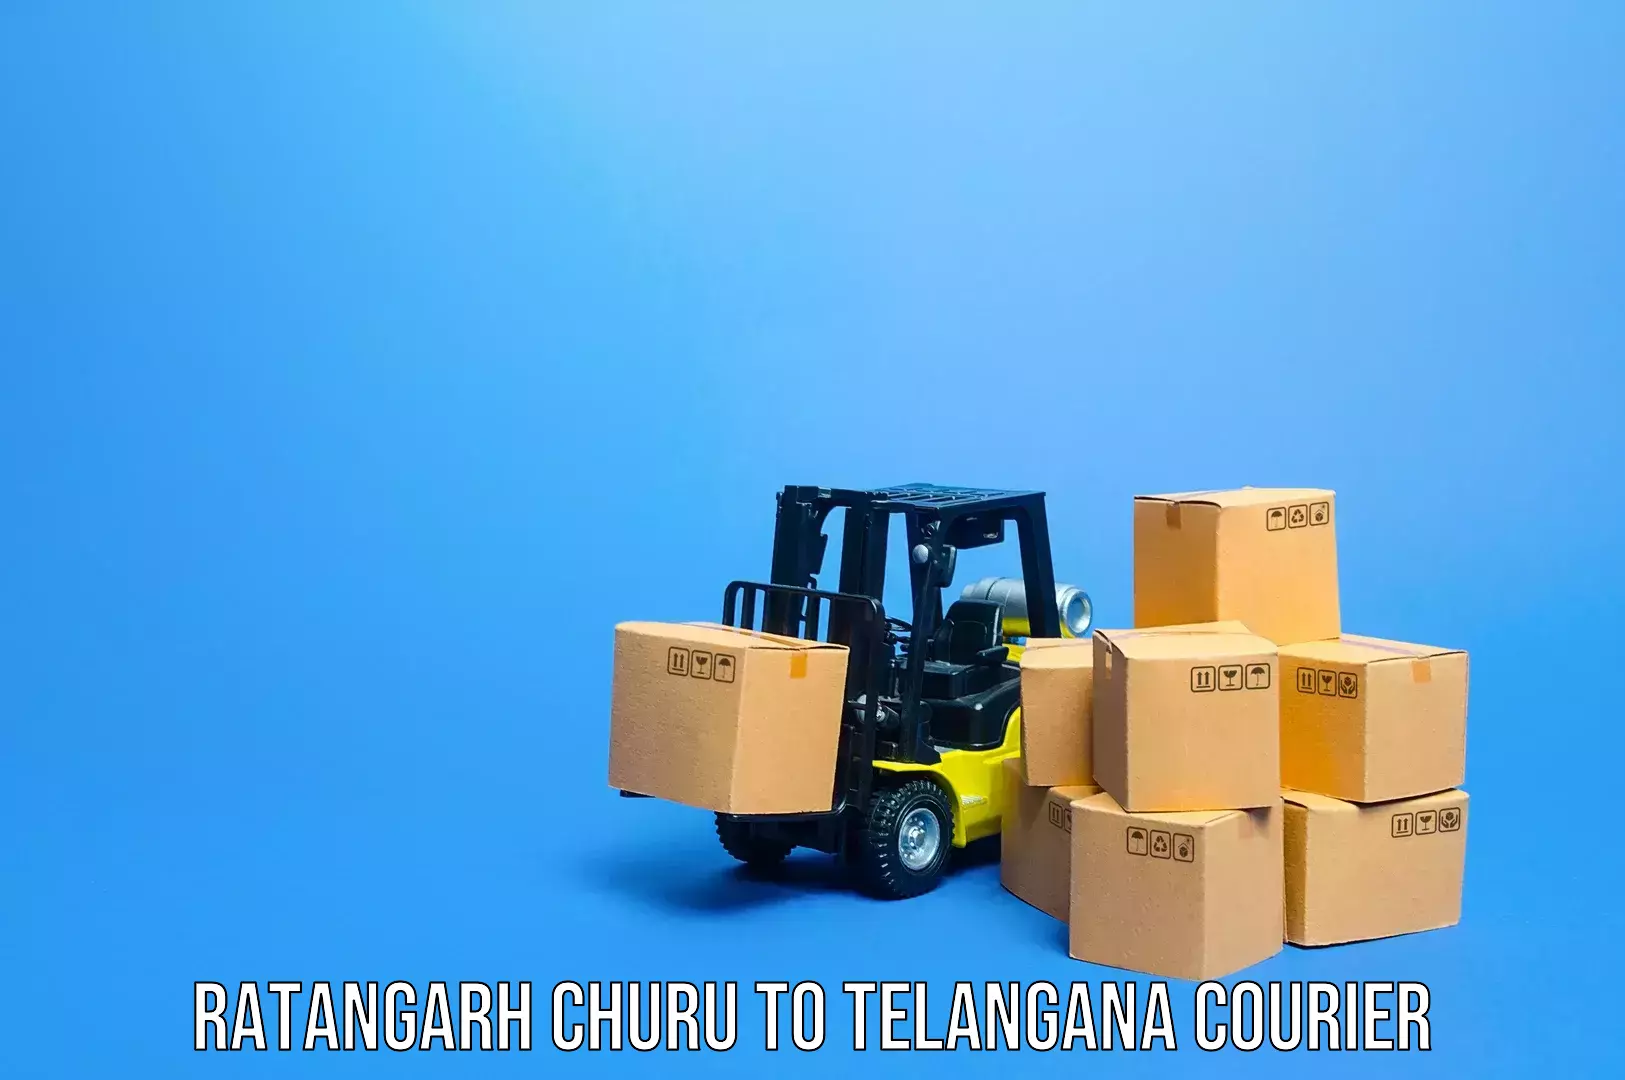 Luggage transport consultancy Ratangarh Churu to Kaghaznagar